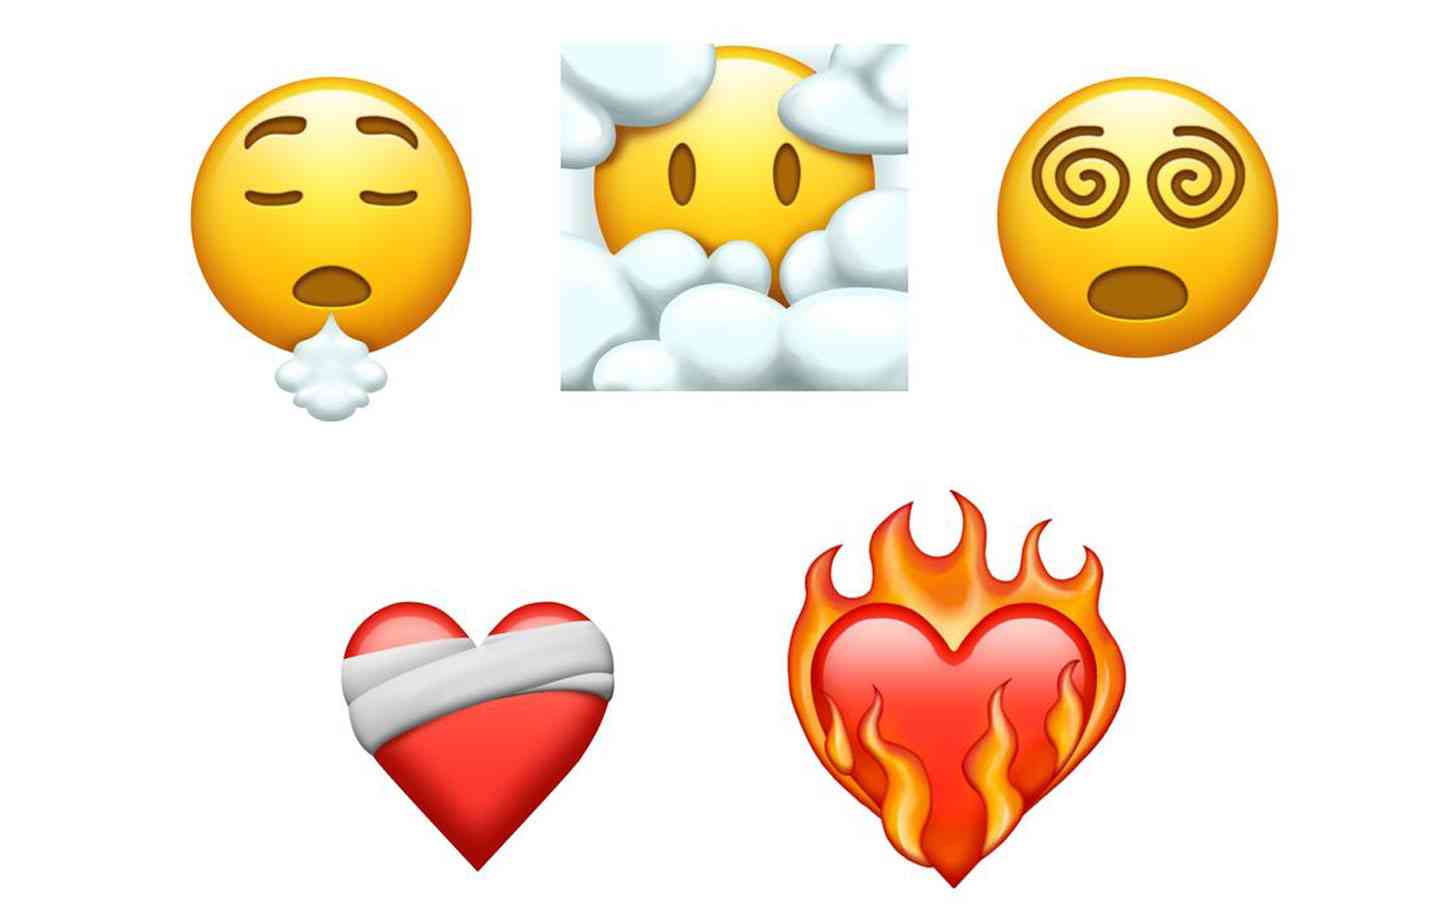 Emoji 13.1 update smiley faces, hearts